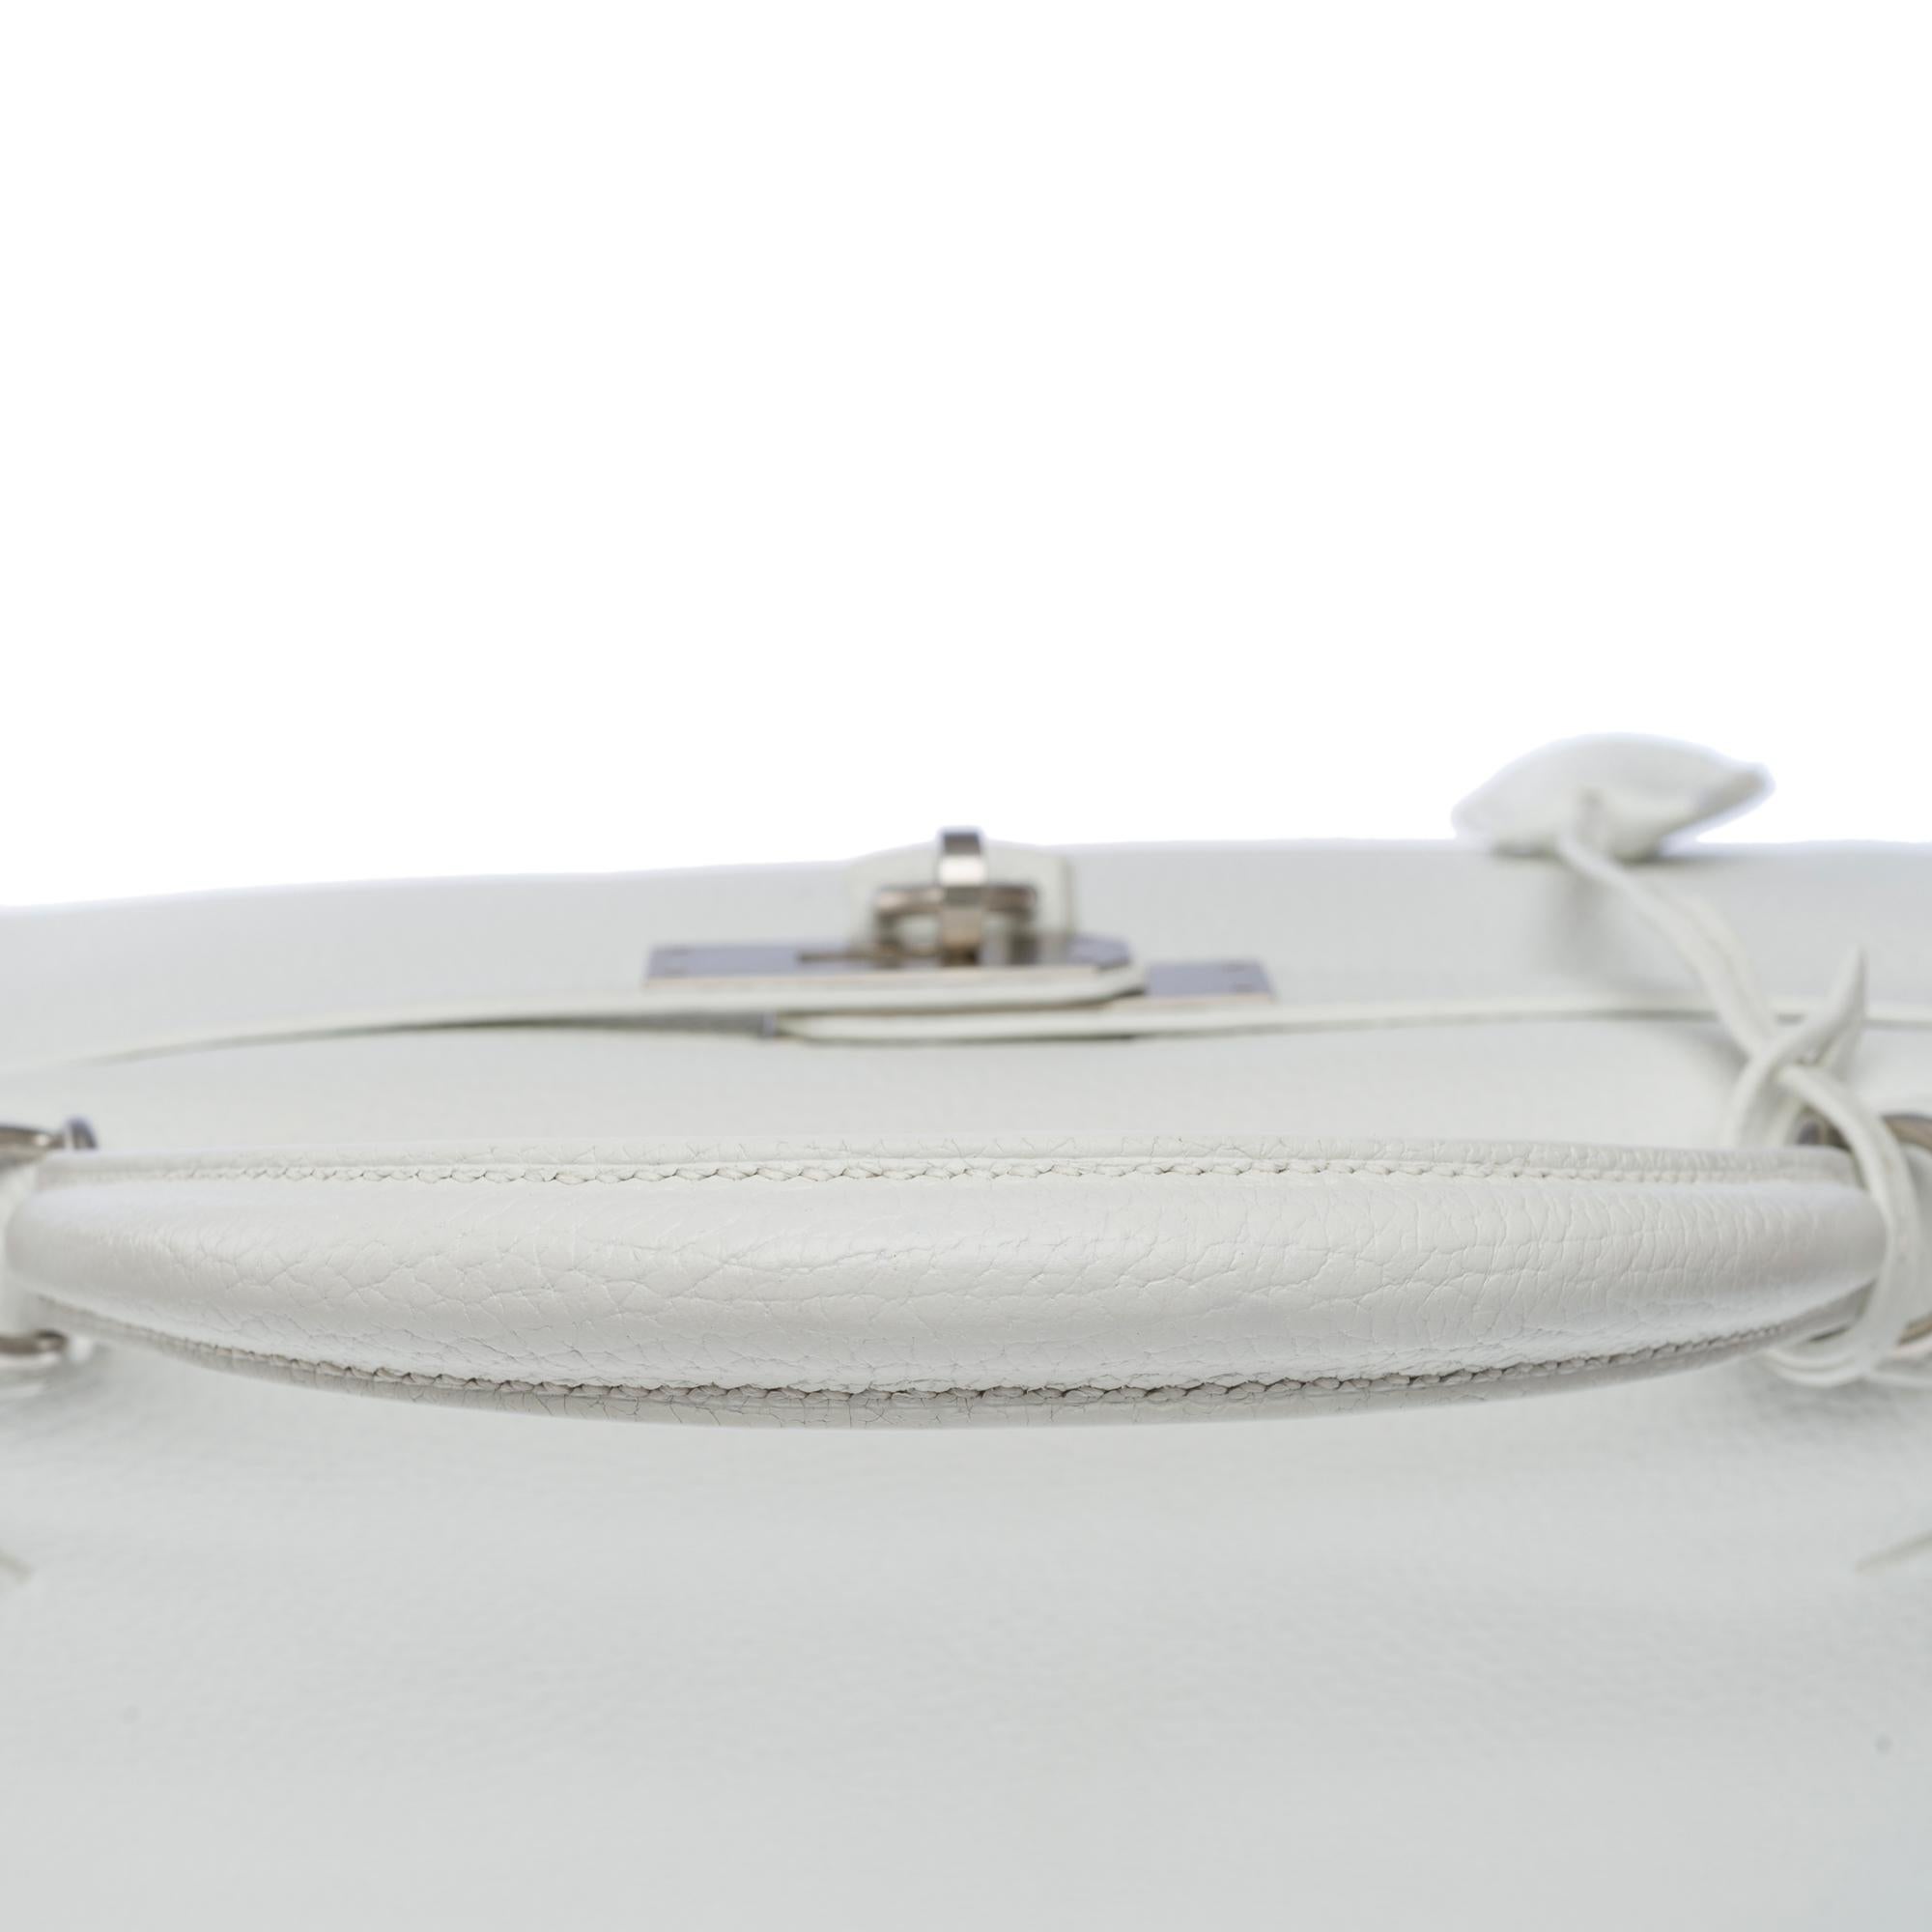 Hermès Kelly 32 handbag strap (HSO) in White & Grey interior leather, BSHW 6